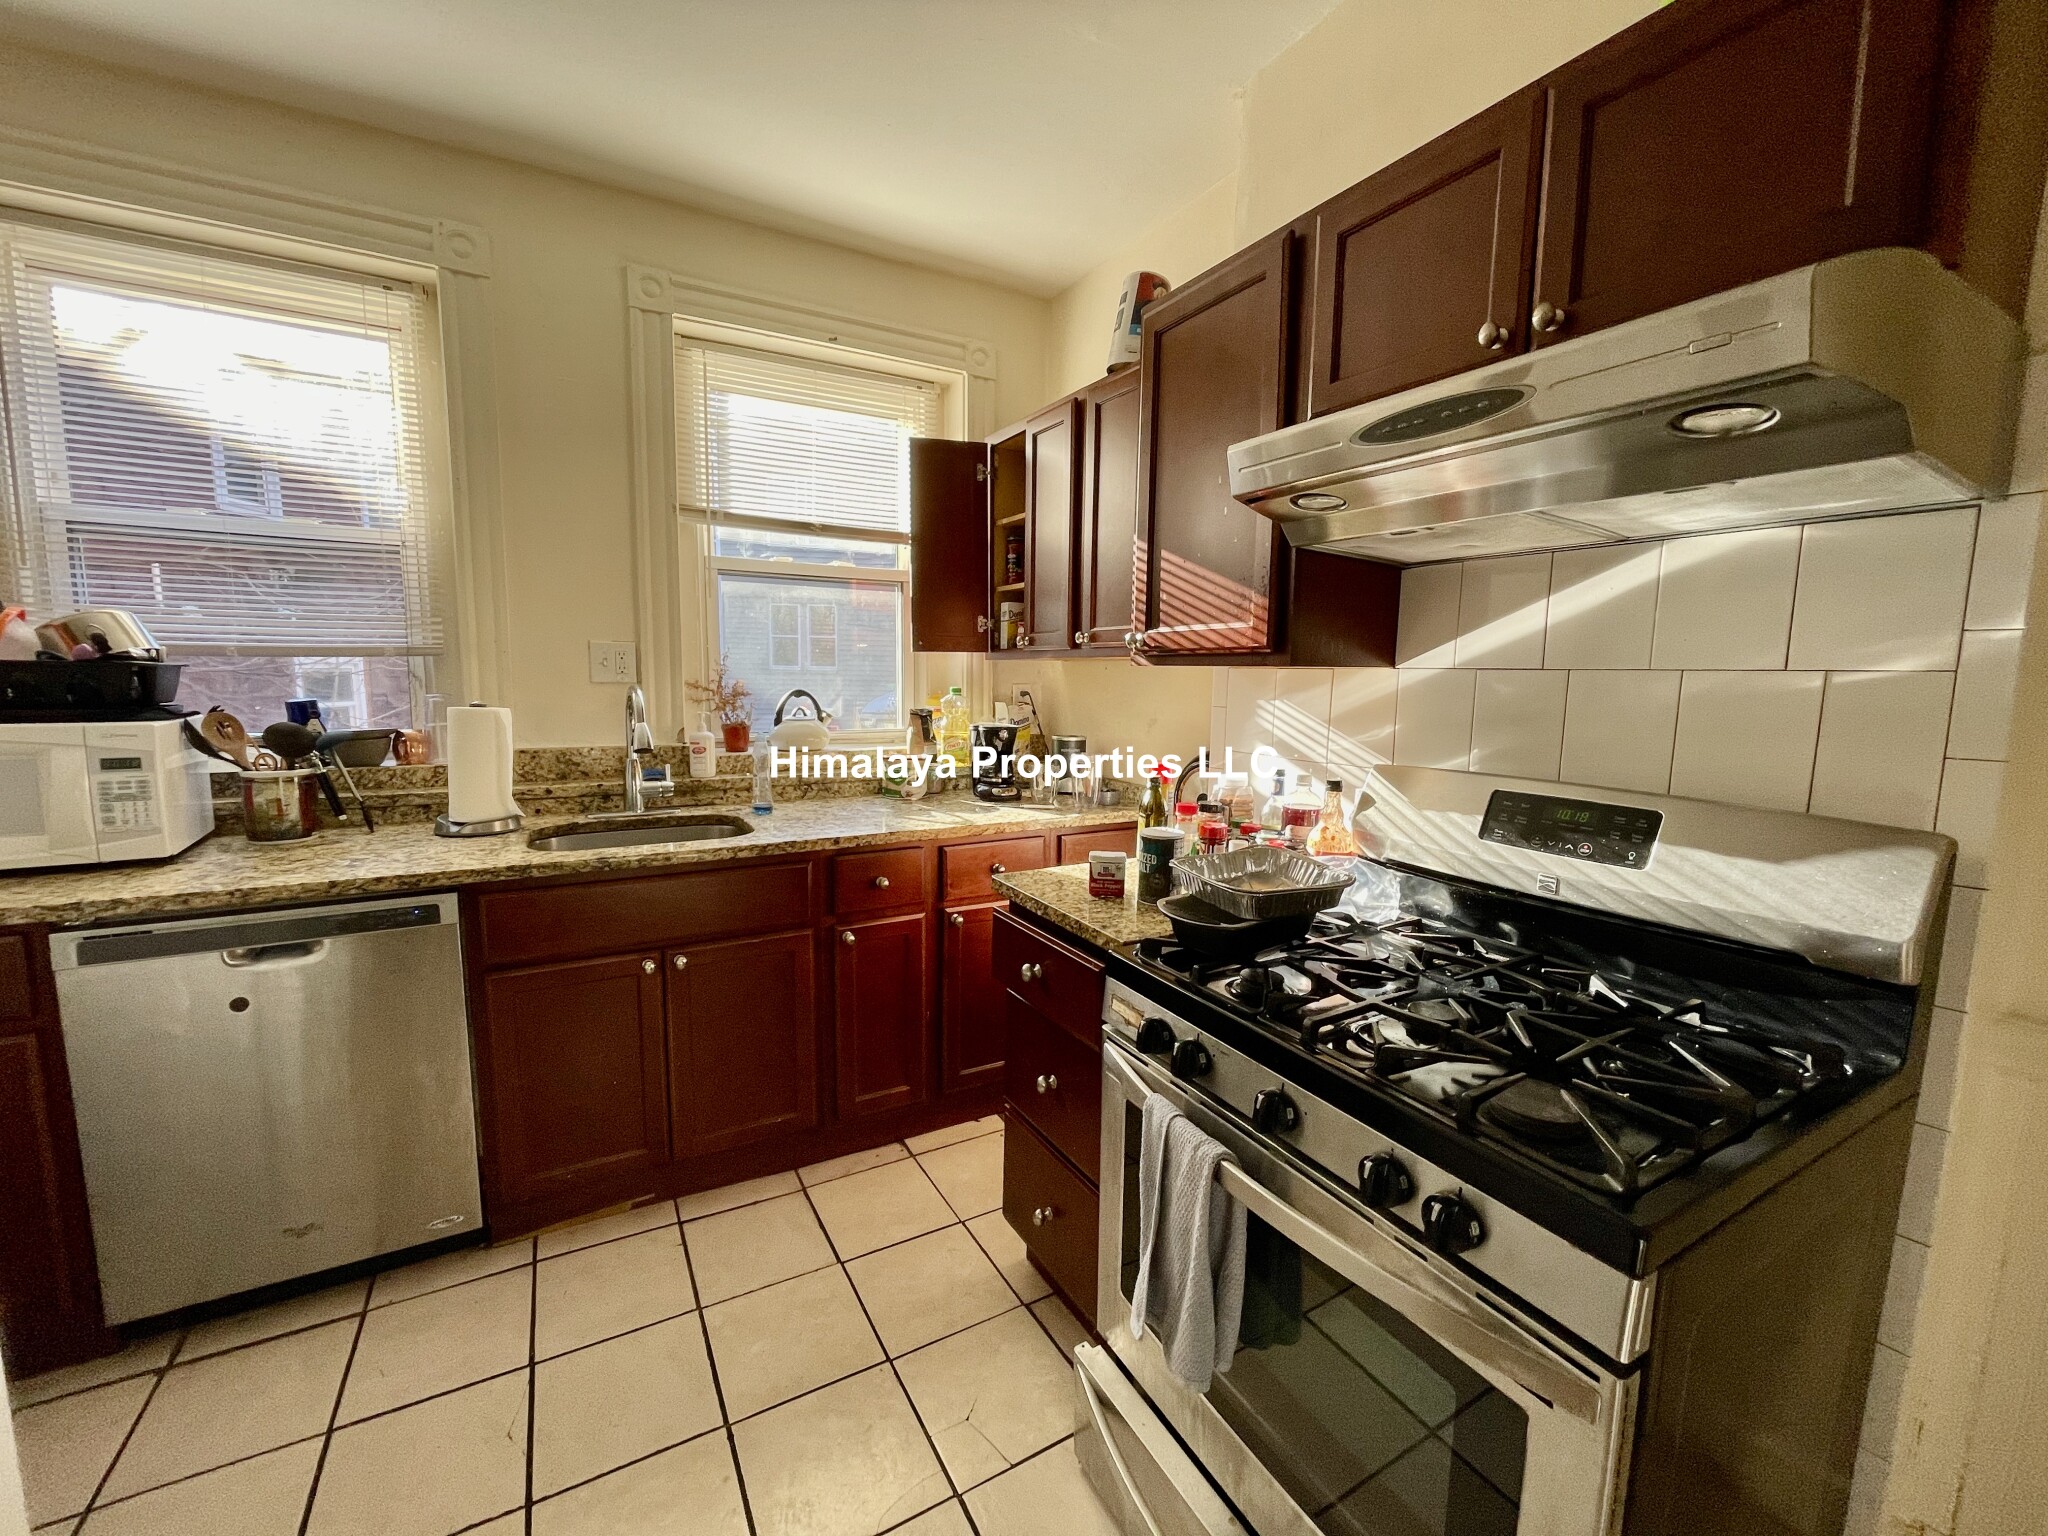 Photos of apartment on Marcella St.,Boston MA 02119